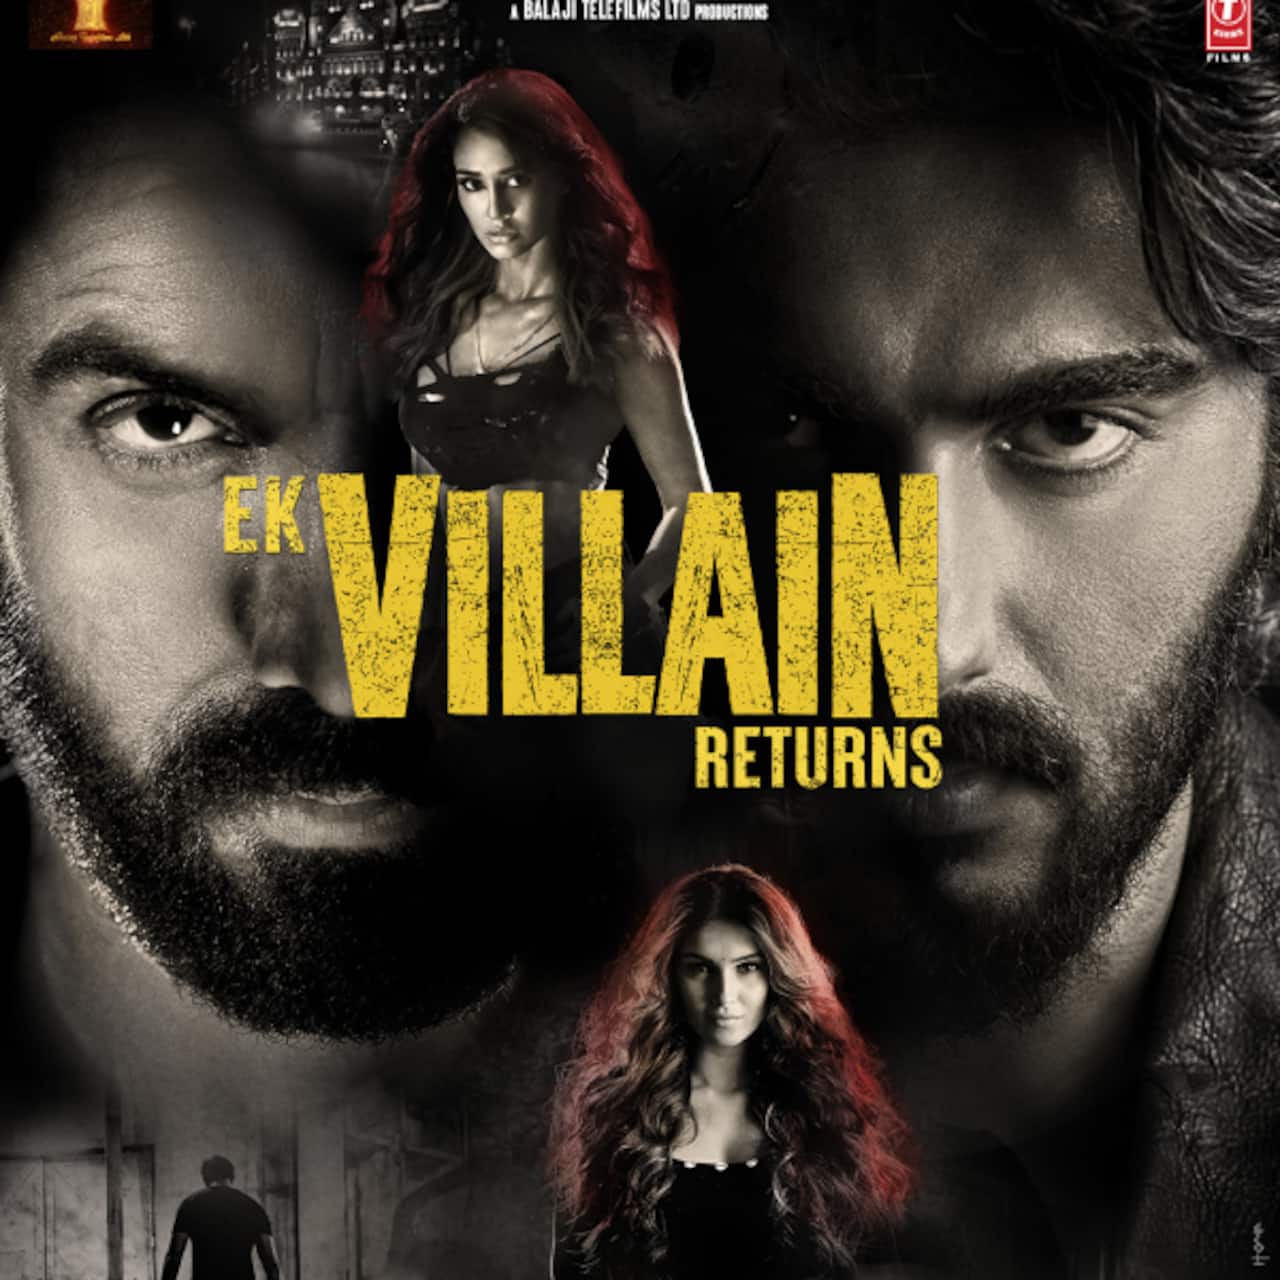 Ek Villain Returns full hd film leaked online on Tamilrockers, Filmyzilla,  Movierulz and more torrents for free